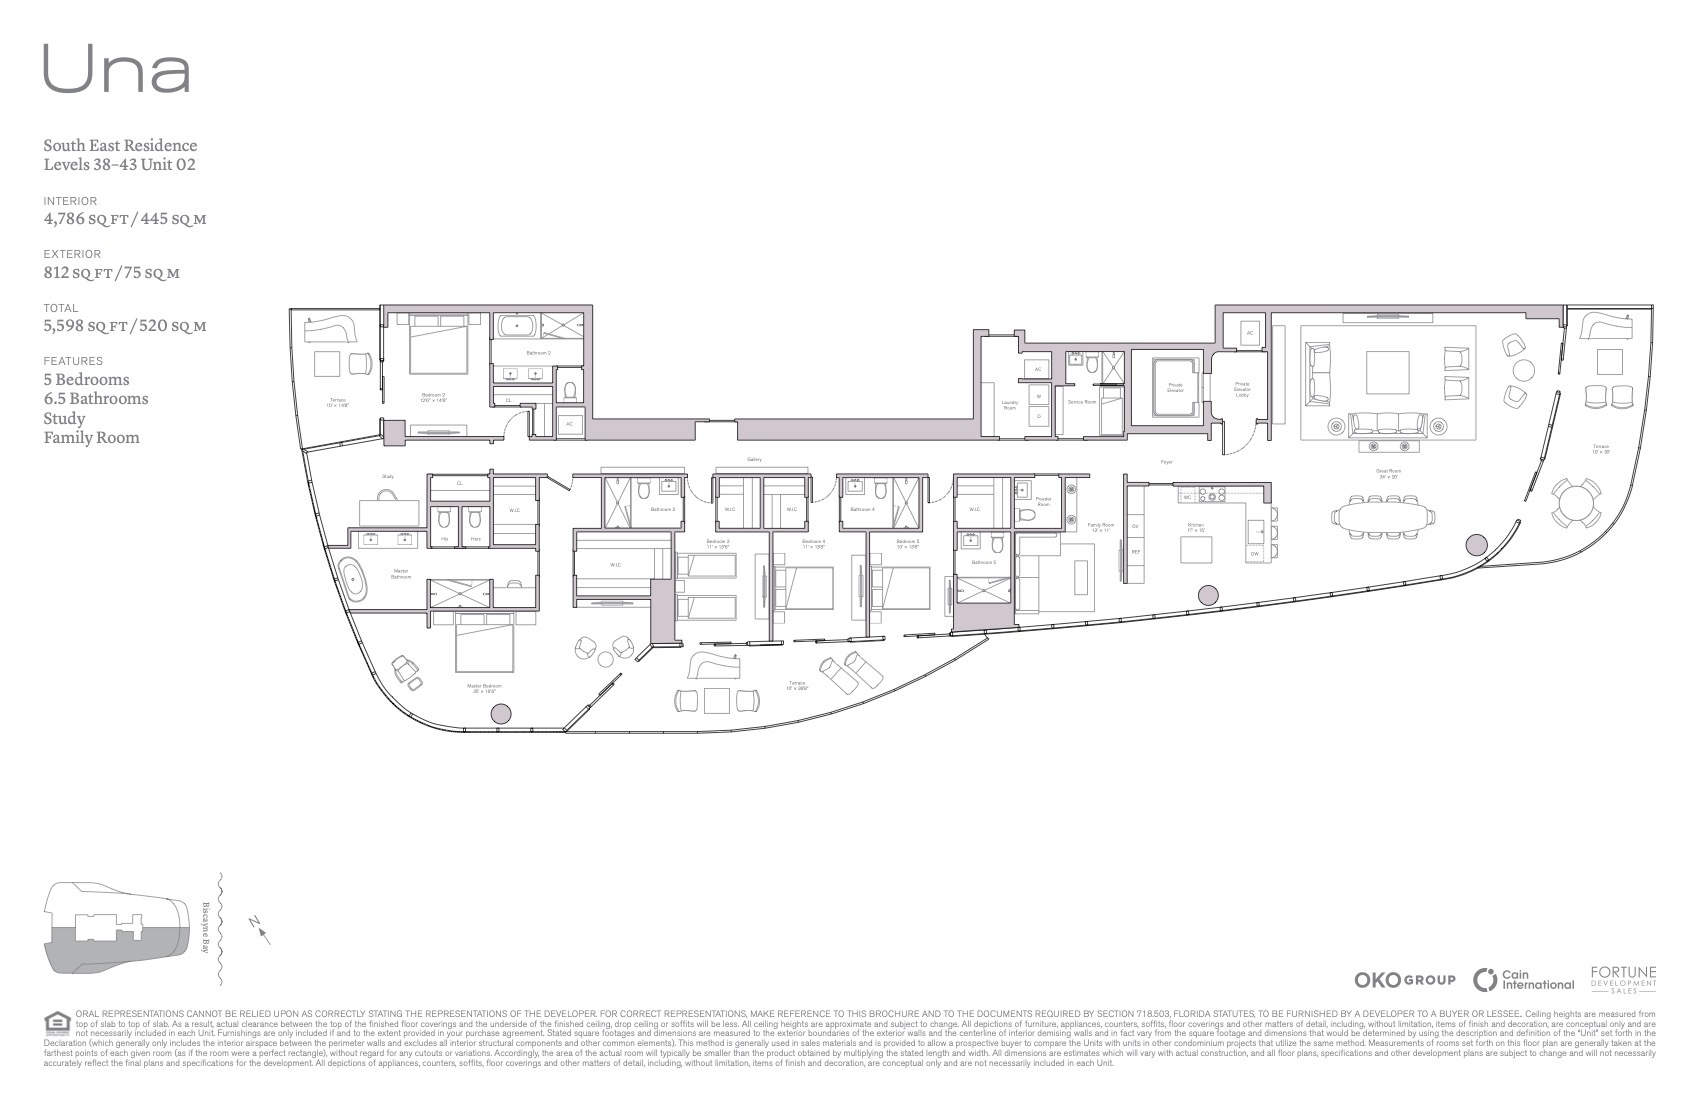 Floor Plan for Una Residences Floor Plans, SE 38-43 Unit 02